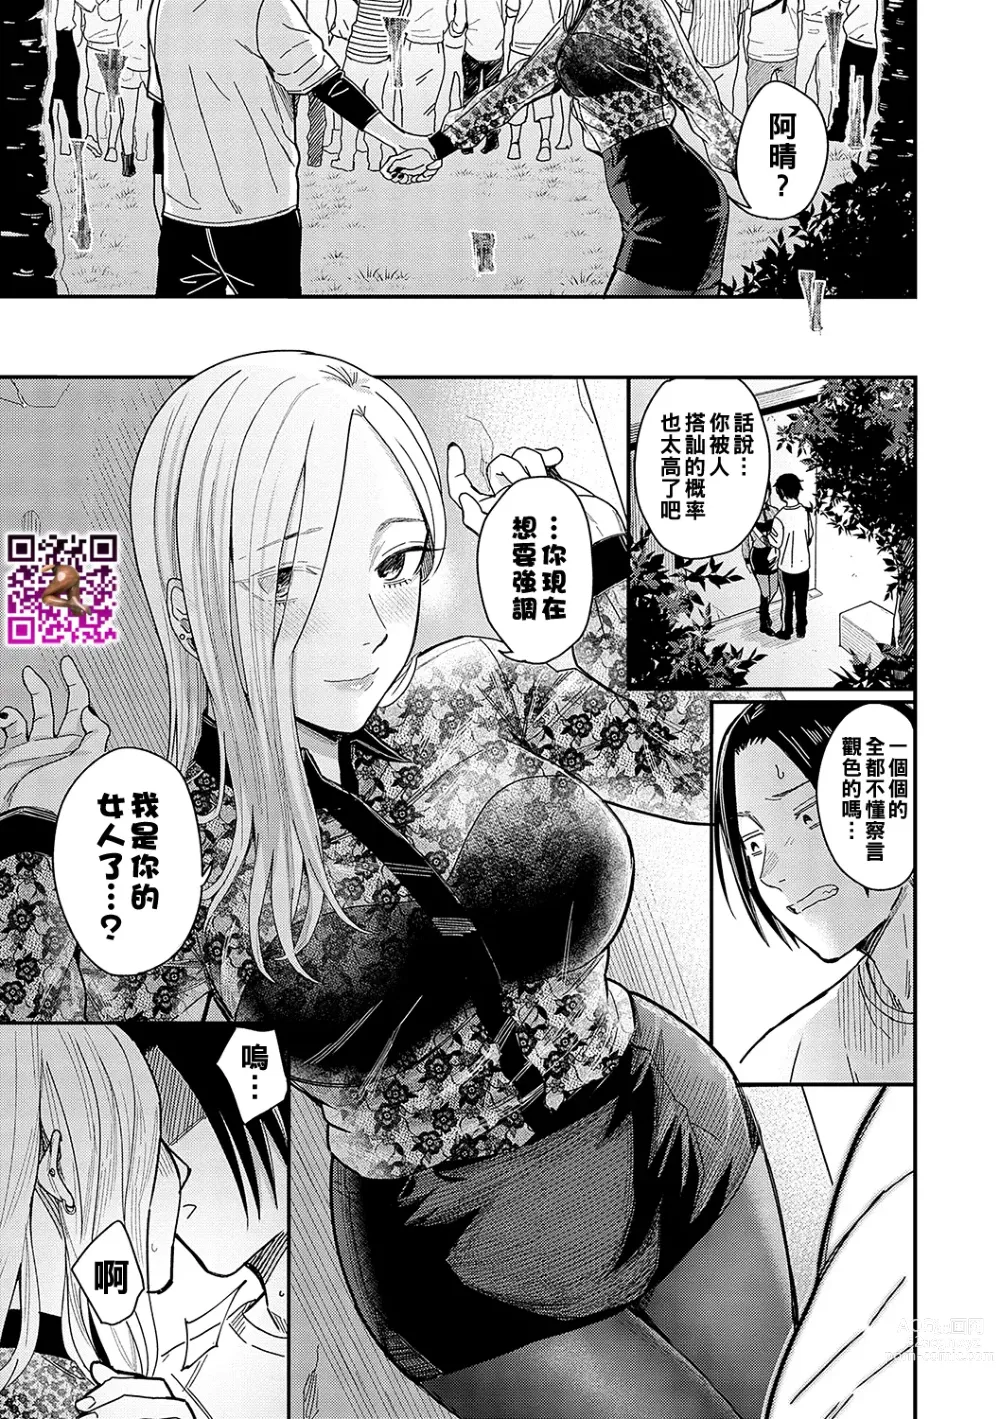 Page 9 of manga Zankyou  to Spotlight - Reverberation and spotlight